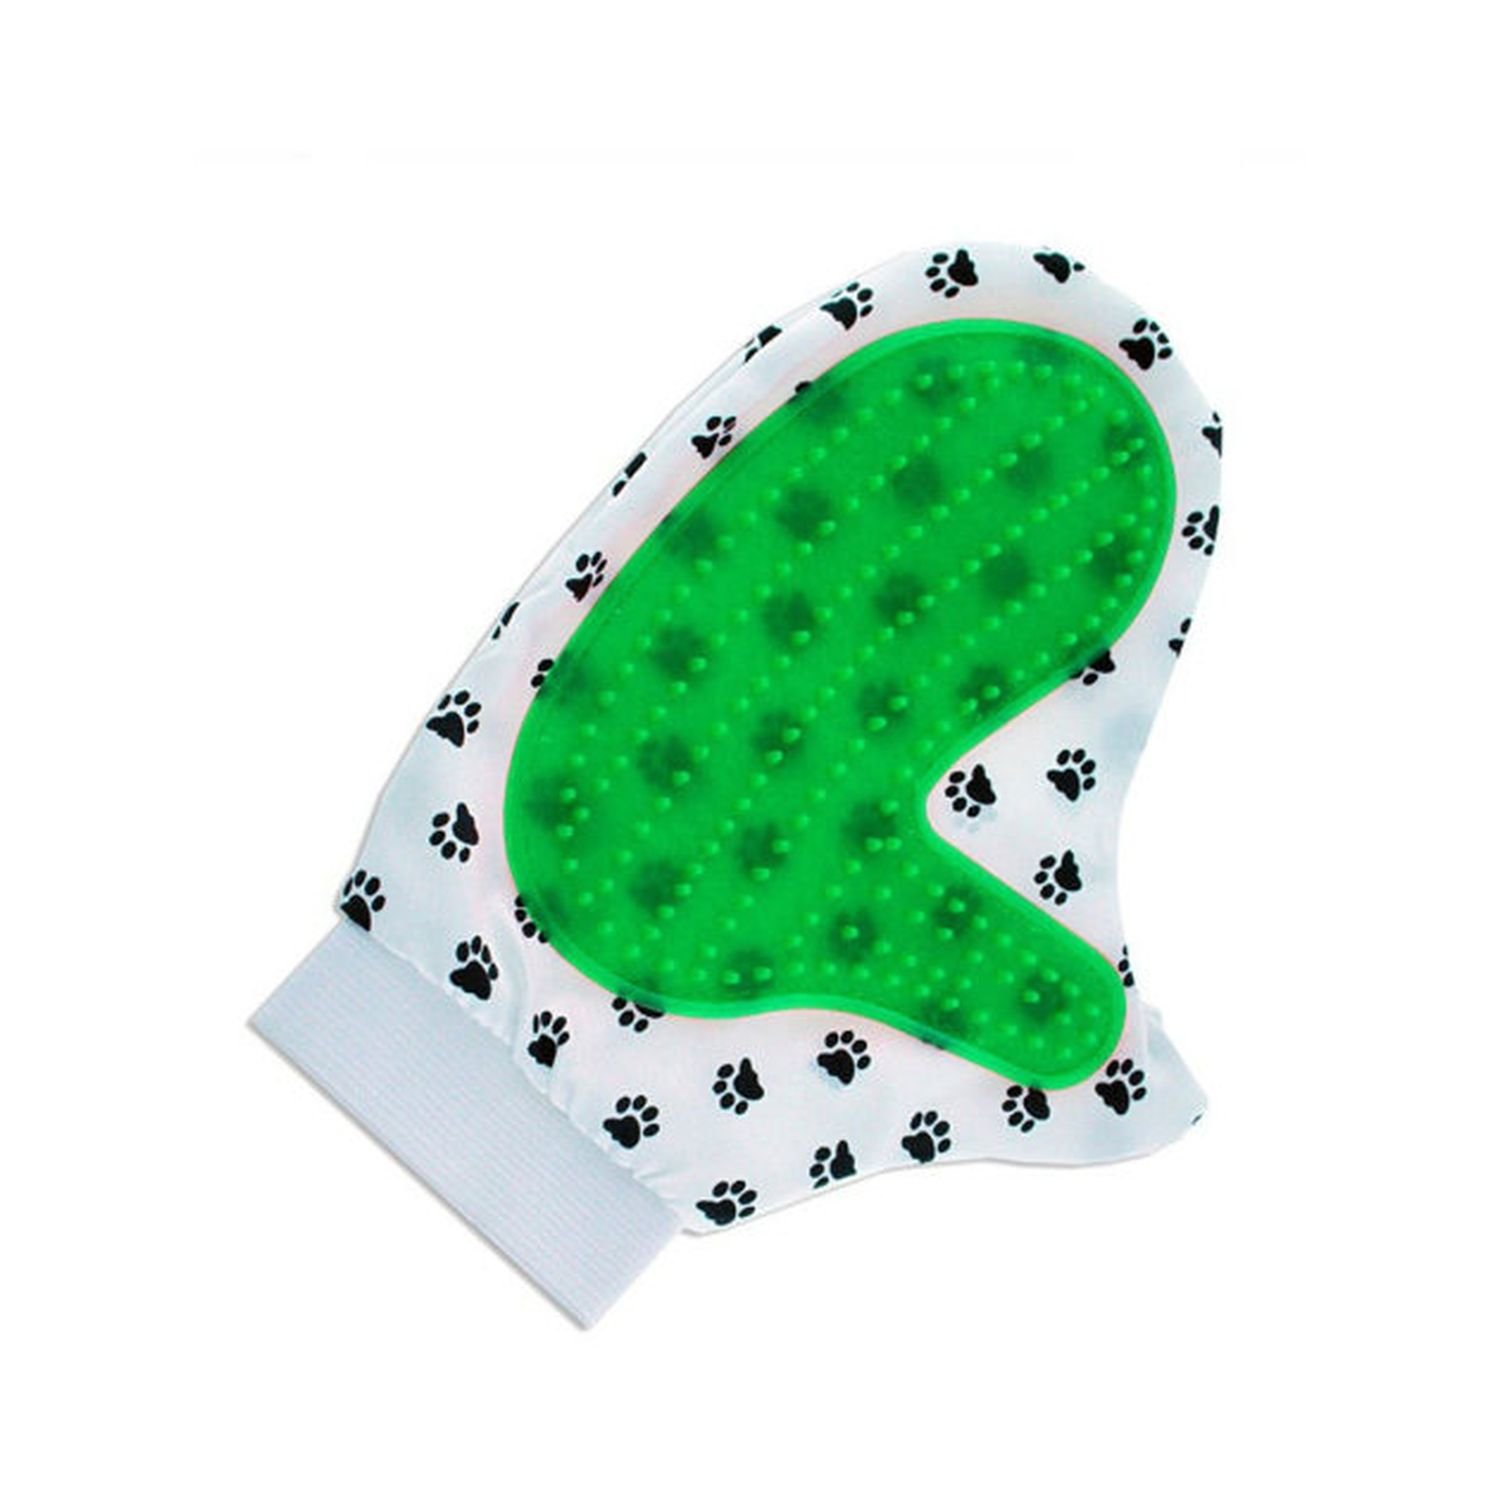 Рукавица для животных Ripoma двухсторонняя зеленая - фото 1